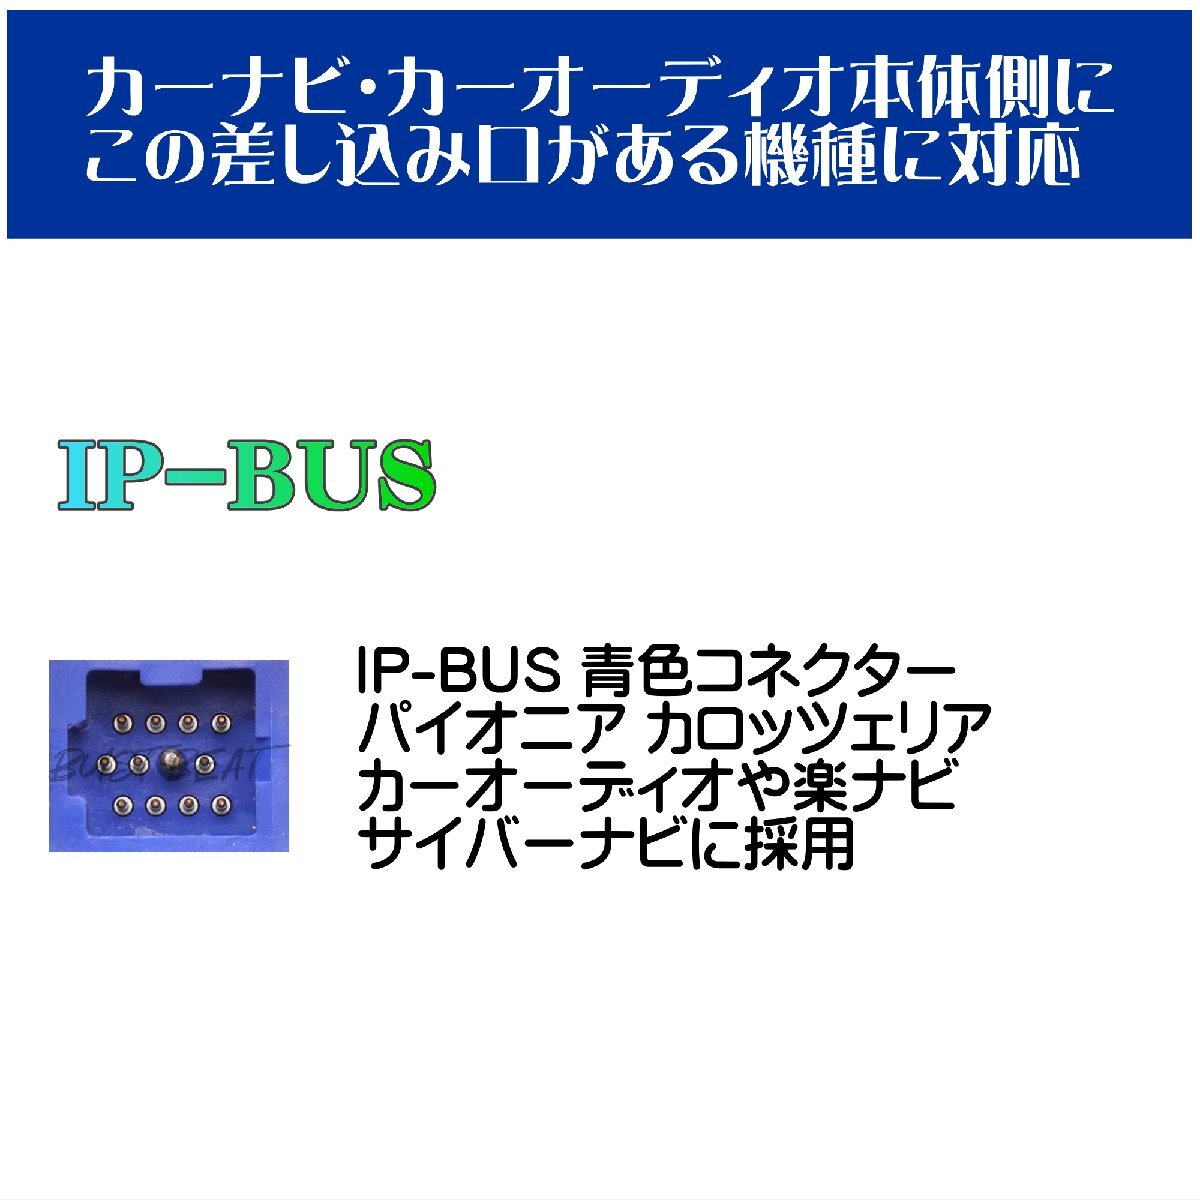 BUST BEAT パイオニア カロッツェリア 用 IP-Bus AUX コード 変換 RCA ケーブル CD-RB10 互換品の画像3